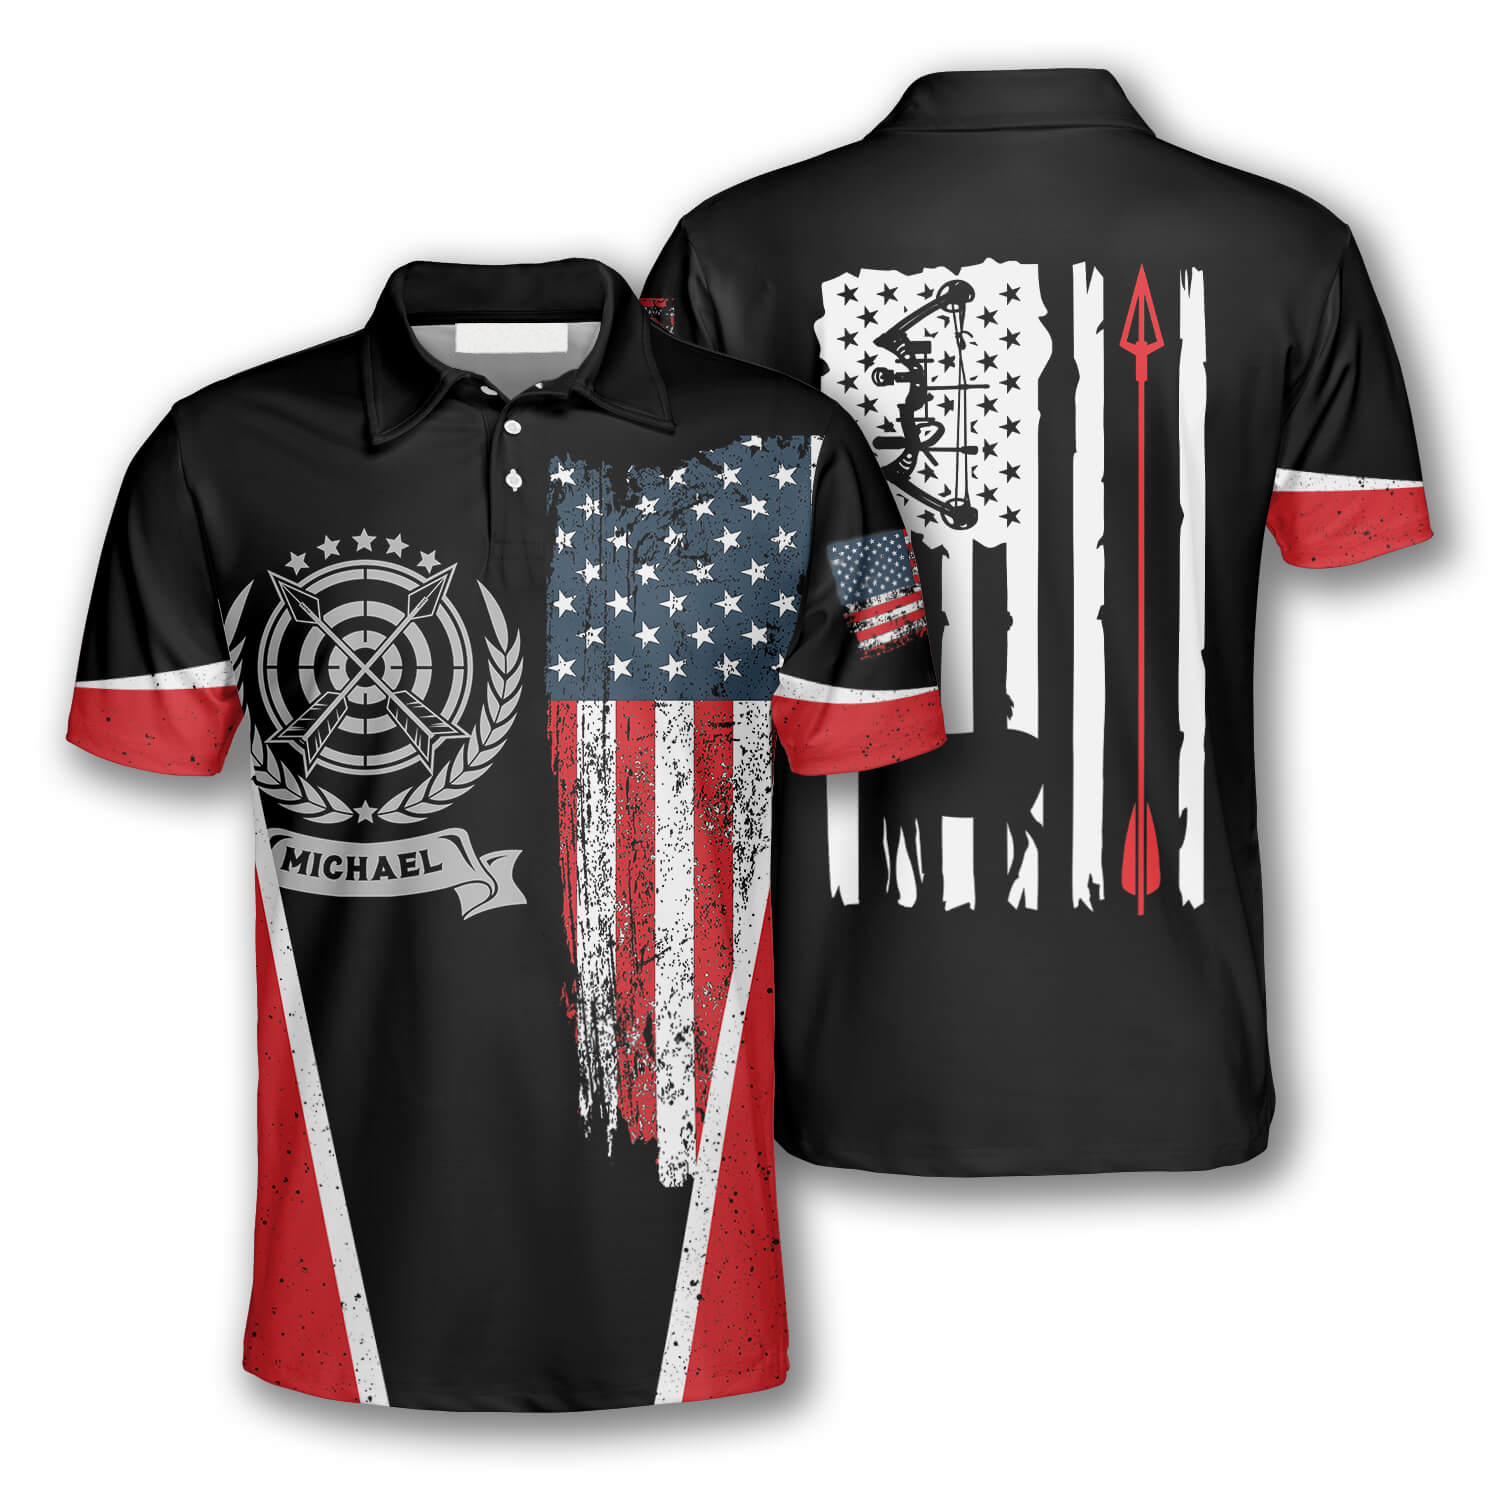 Archery Crown Emblem American Flag Custom Archery Shirts for Men/ Gift for Archery Lover